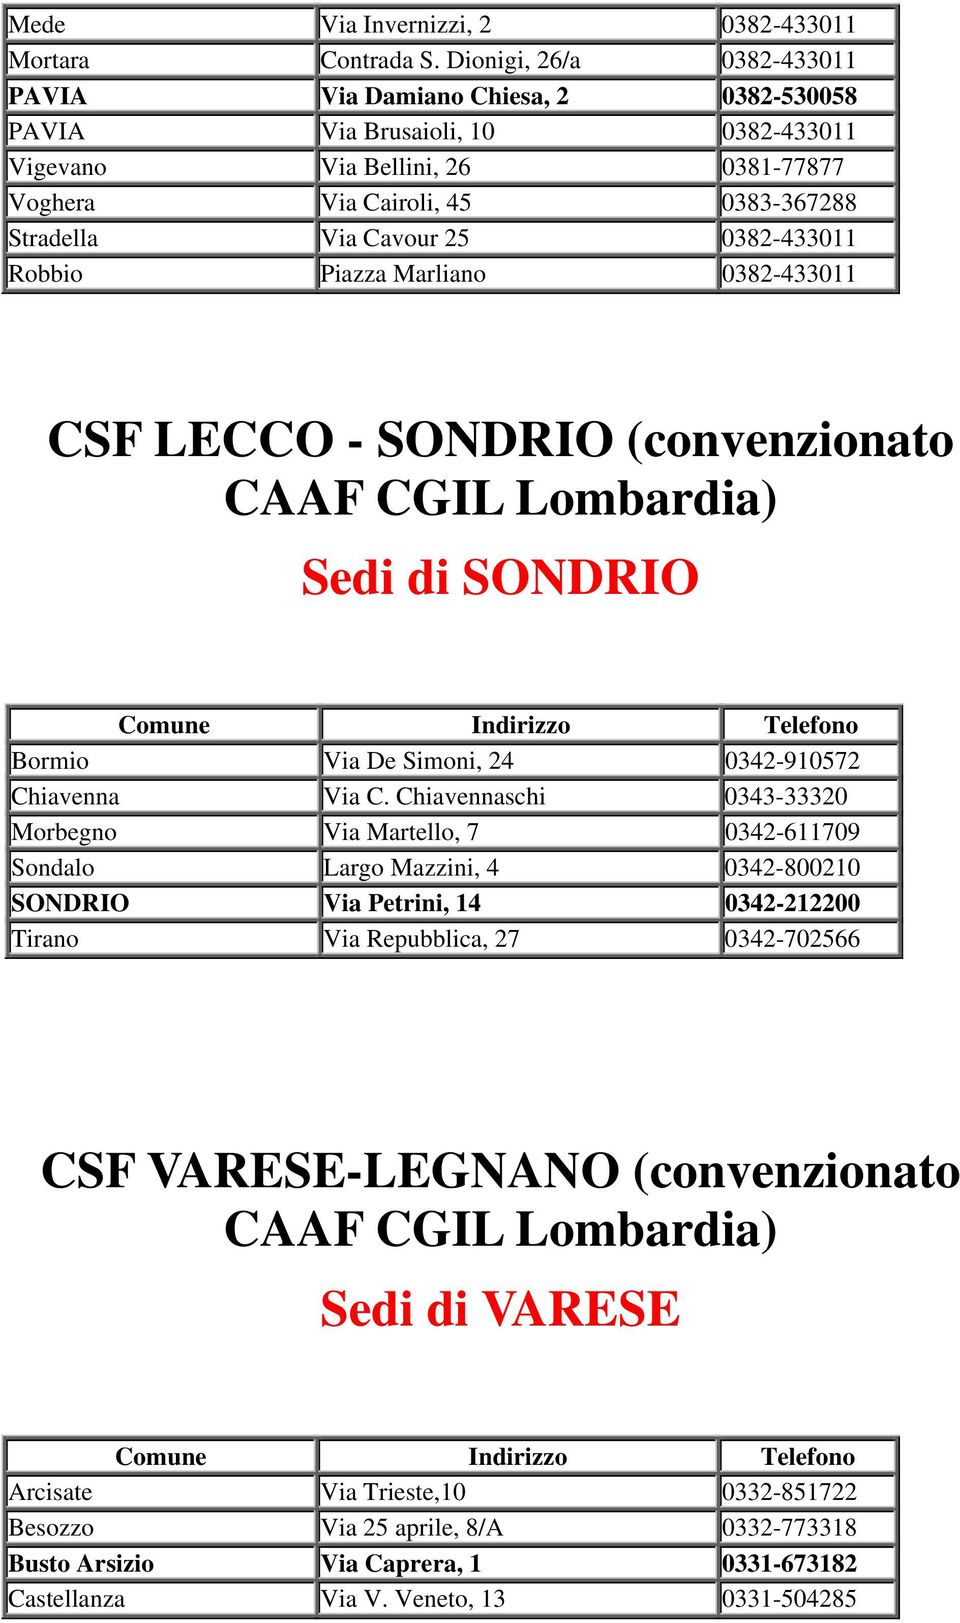 25 0382-433011 Robbio Piazza Marliano 0382-433011 CSF LECCO - SONDRIO (convenzionato Sedi di SONDRIO Bormio Via De Simoni, 24 0342-910572 Chiavenna Via C.